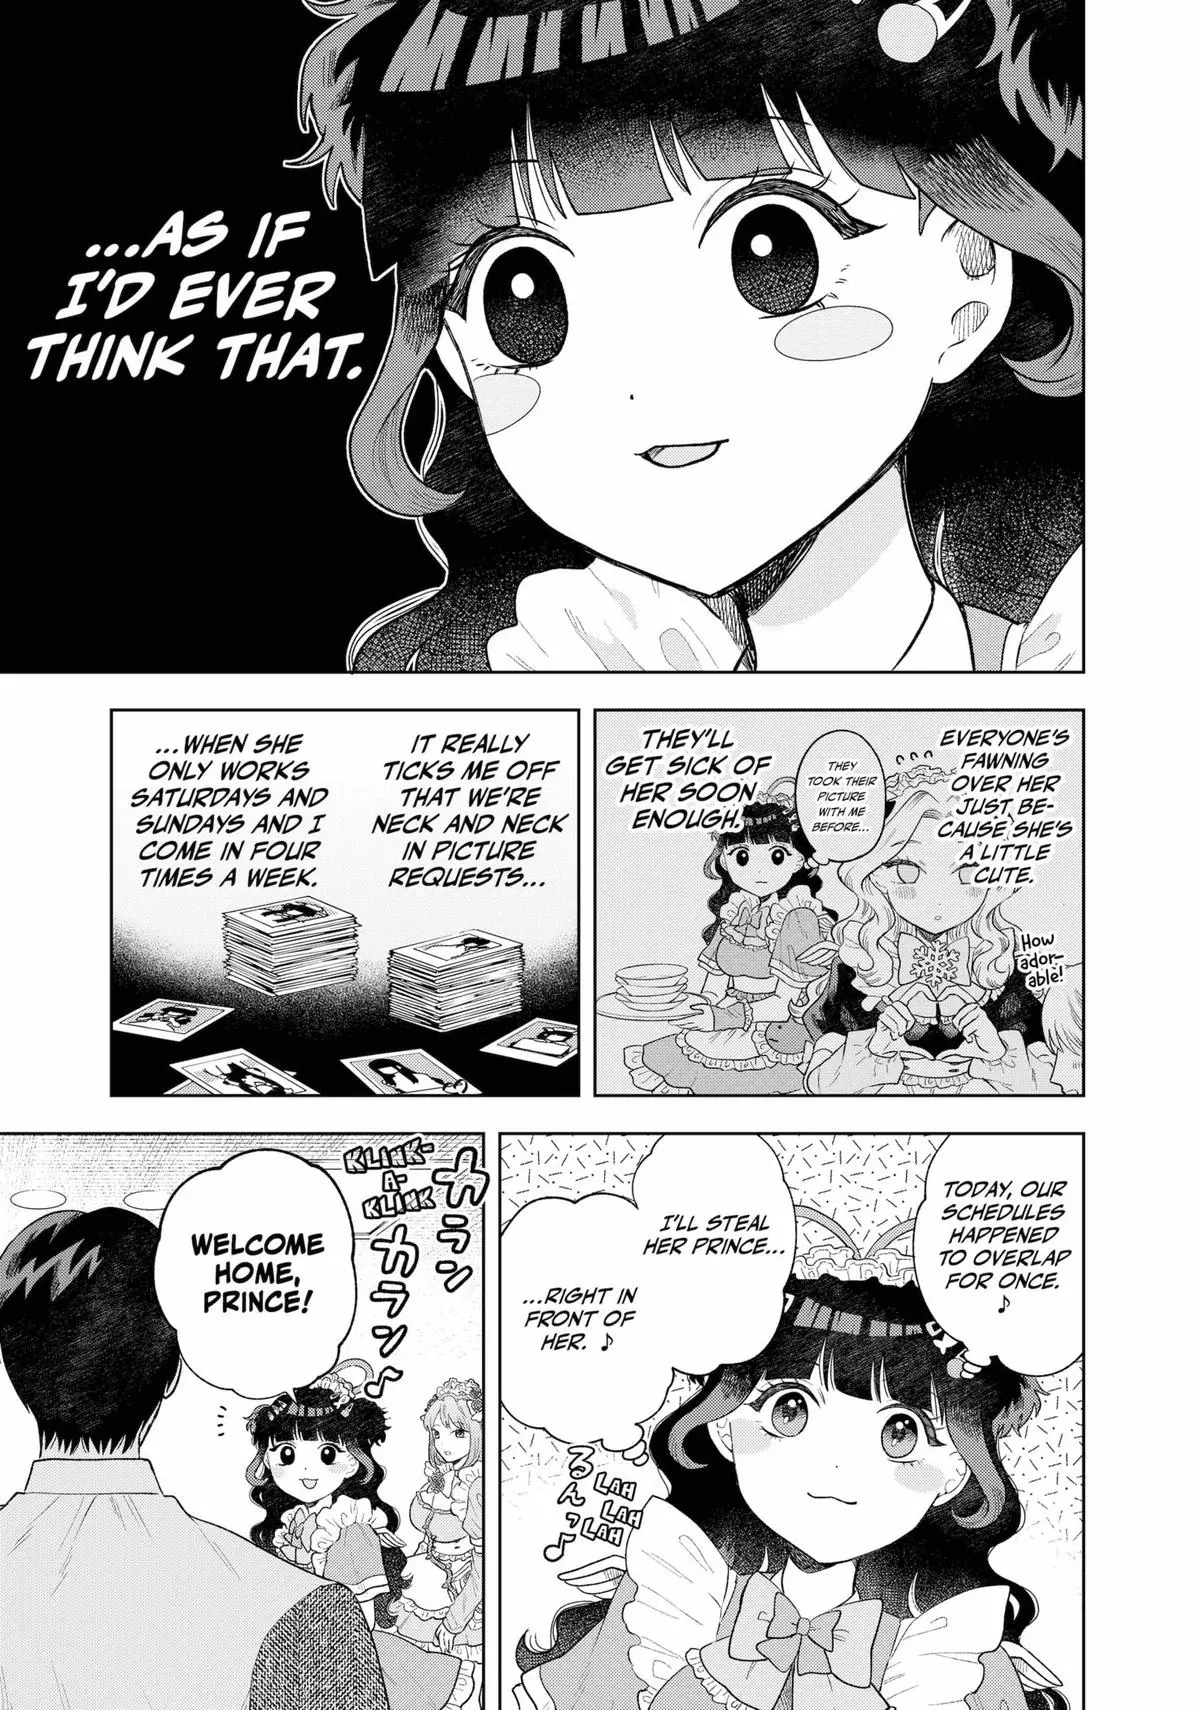 Tsuruko Returns The Favor - 5 page 5-3d814524